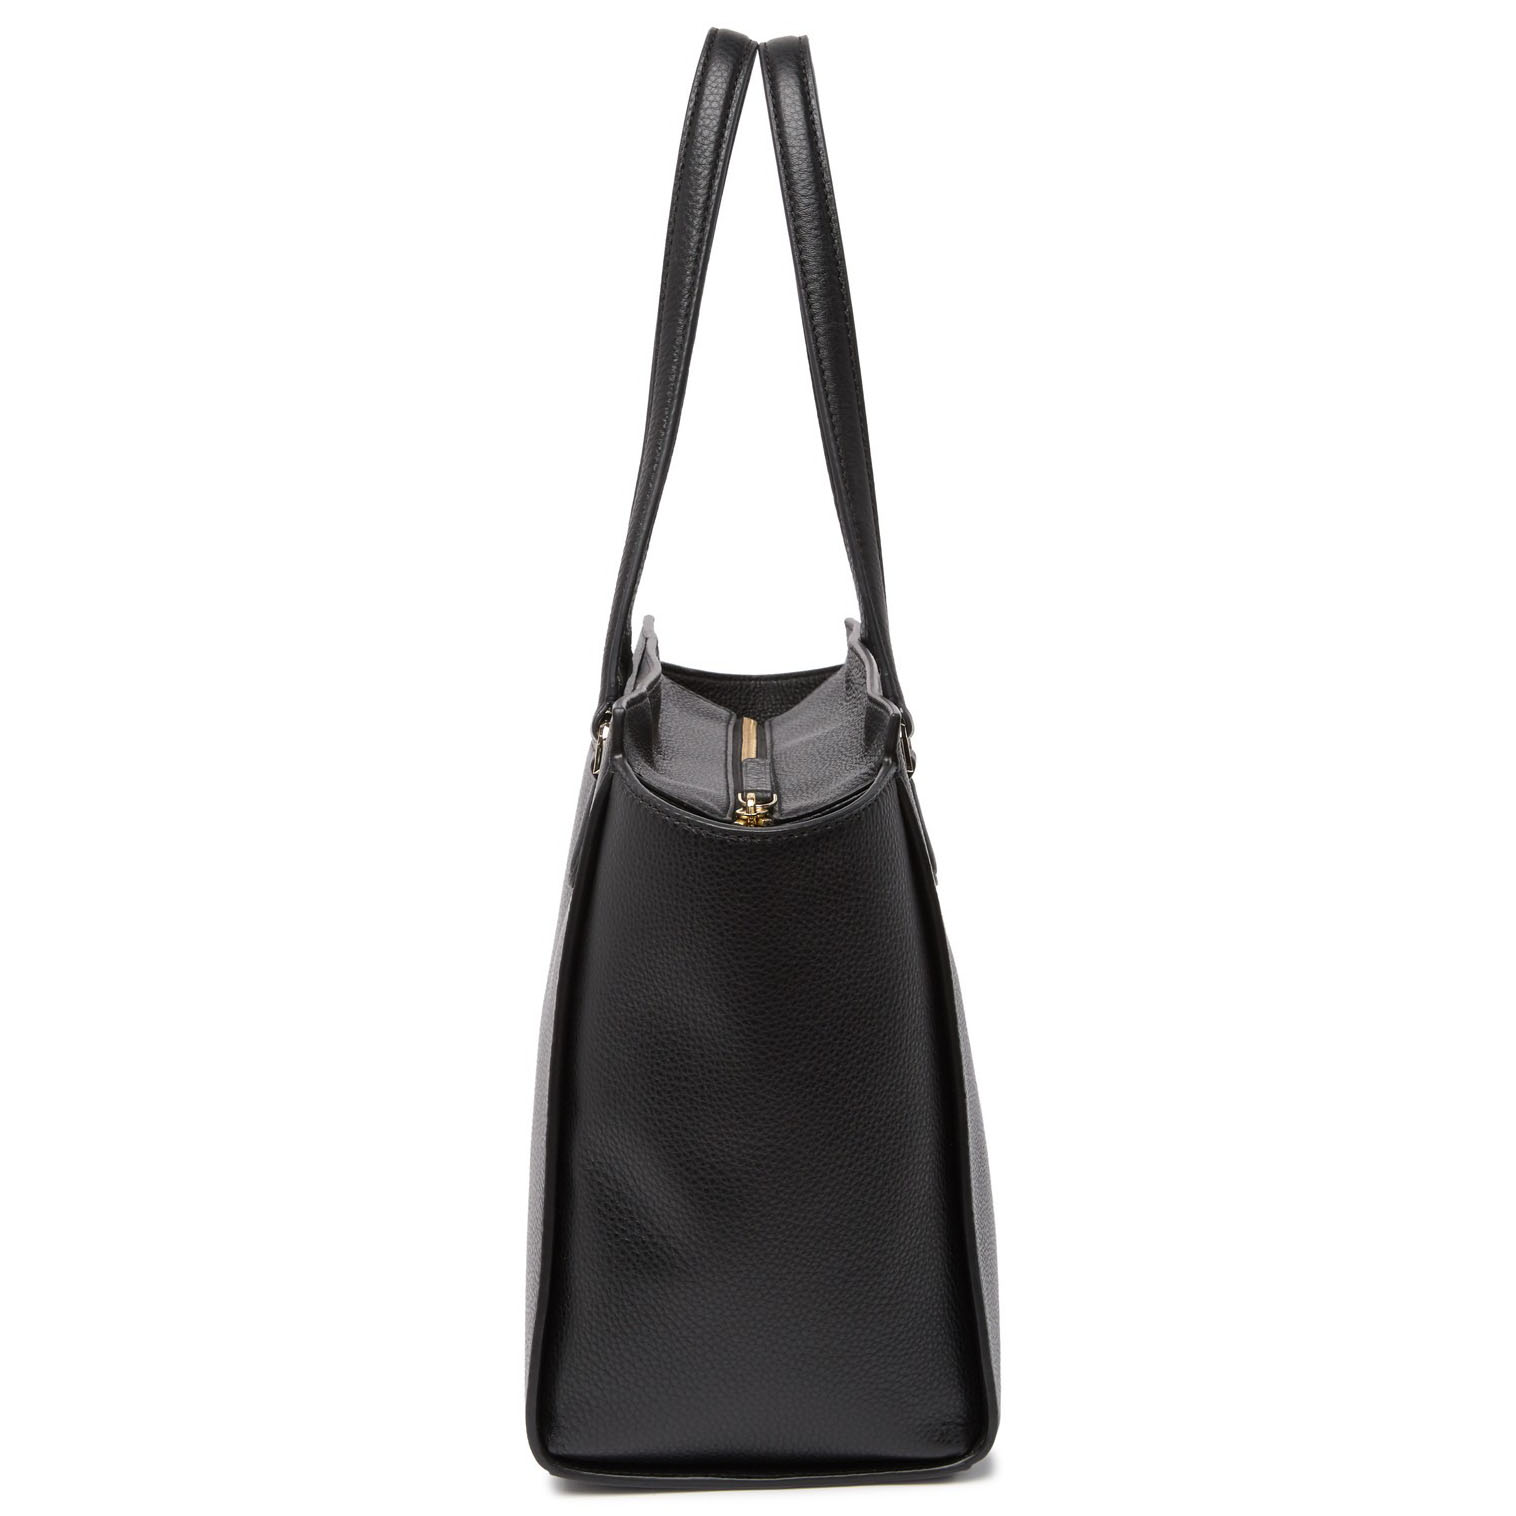 SpreeSuki - Kate Spade Shoulder Bag With Gift Bag Jackson Medium Tote ...